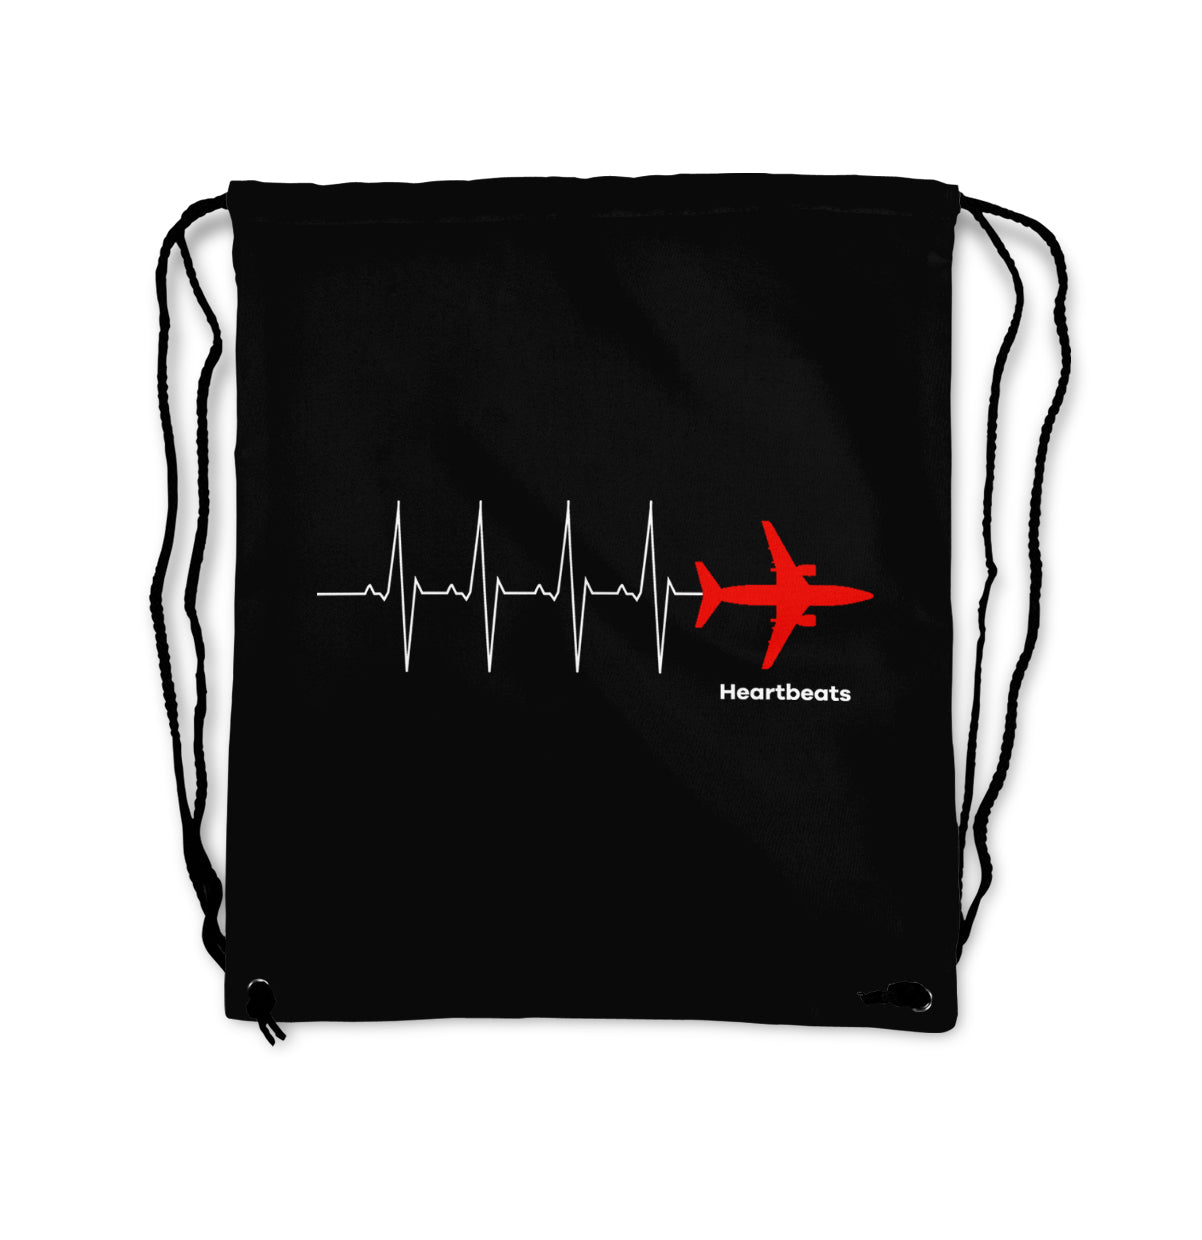 Aviation Heartbeats Designed Drawstring Bags